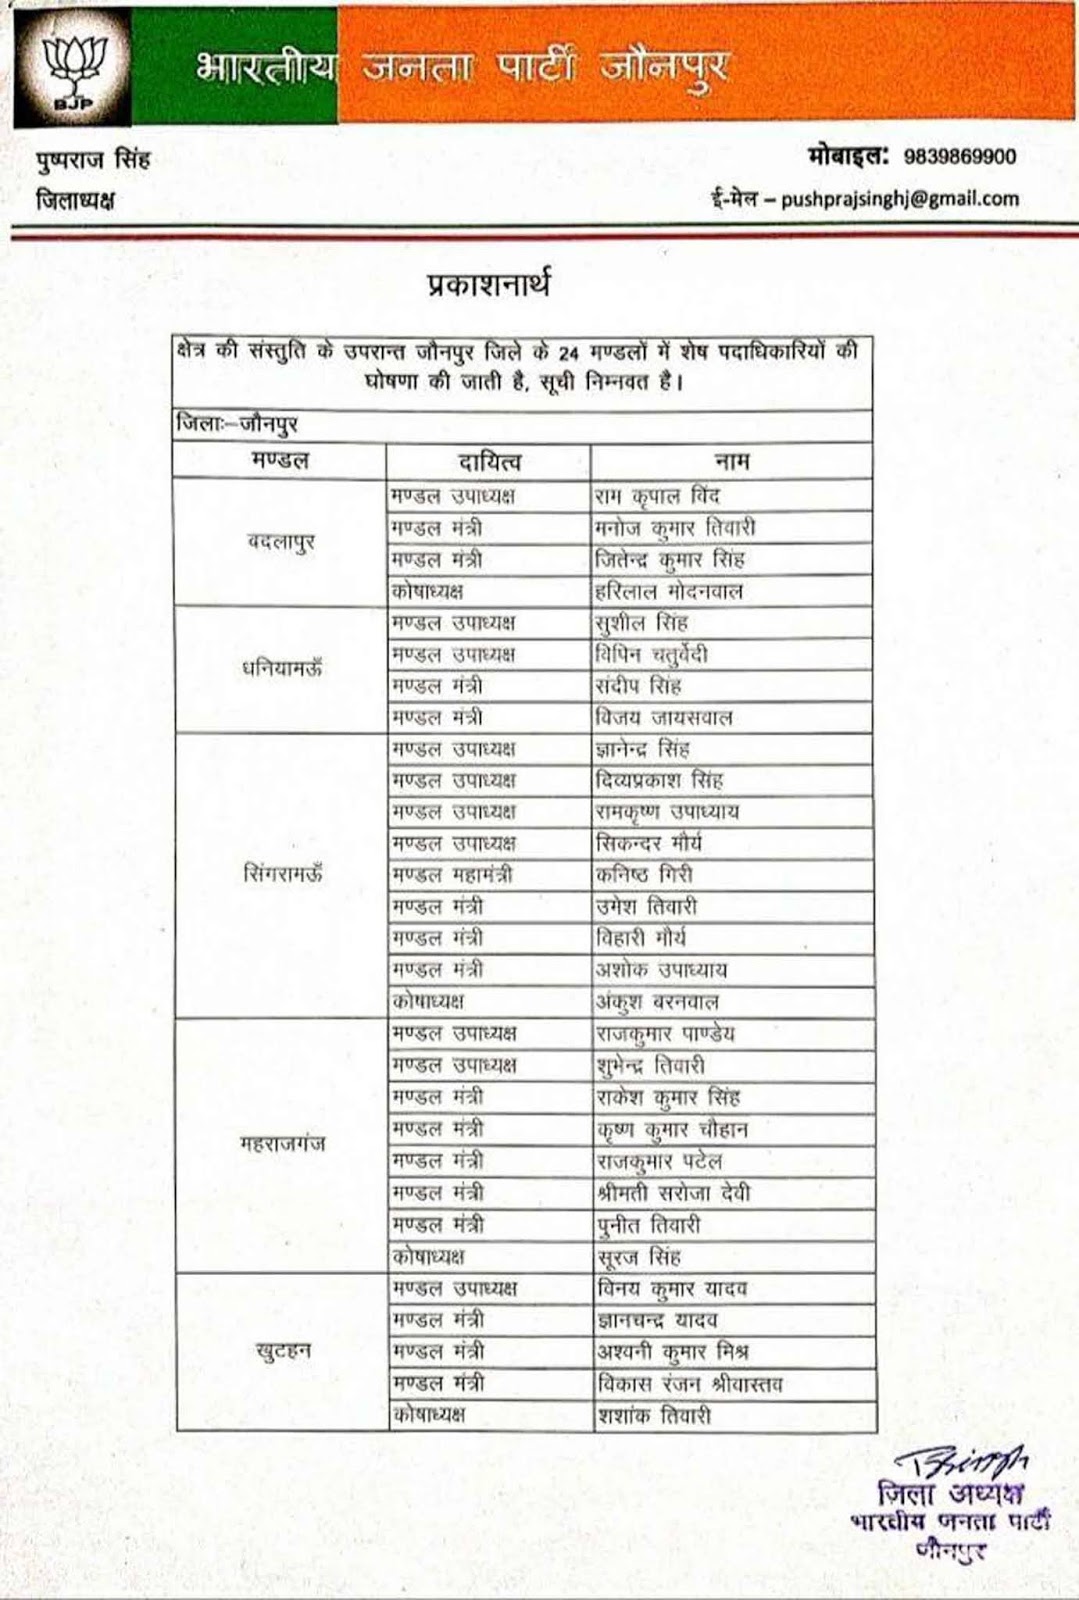 भाजपा जिलाध्यक्ष पुष्पराज सिंह ने की मण्डल पदाधिकारियों की घोषणा | #TEJASTODAY जौनपुर। भारतीय जनता पार्टी जौनपुर के जिला अध्यक्ष पुष्पराज सिंह ने भारतीय जनता पार्टी के 24 मंडलों में शेष पदाधिकारियों की घोषणा की है उक्त घोषणा पूर्व में घोषित मंडल पदाधिकारियों के साथ जोड़ ली जाएगी और अब प्रत्येक मंडल में पदाधिकारियों की सूची पूर्ण हो गई है , जिसमे 53 मण्डल उपाध्यक्ष, 11 मण्डल महामंत्री, 56 मण्डल मंत्री और 14 कोषाध्यक्ष घोषित किये गये जो मण्डल वार निम्नवत है। मण्डल उपाध्यक्ष बदलापुर मण्डल से रामकृपाल विन्द, धनियामऊ मण्डल से सुशील सिंह, विपिन चतुर्वेदी, सिंगरामऊ मण्डल से ज्ञानेंद्र सिंह, दिव्य प्रकाश सिंह, रामकृष्ण उपाध्याय सिकंदर मौर्य, महाराजगंज मण्डल से राजकुमार पांडे, शुभेन्द्र तिवारी, खुटहन मण्डल से विनय कुमार यादव, सुइथाकला मण्डल से विनोद सिंह, रोशन सिंह, अवधेश मिश्रा, अरसिया मण्डल से राकेश बिंद, अवधेश दुबे, कृष्णधारी सिंह, शाहगंज मण्डल से संदीप जायसवाल, संदीप जायसवाल, जौनपुर दक्षिणी मण्डल से बसंत प्रजापति, मनोज कुमार तिवारी, राजेश कन्नौजिया, अभिषेक श्रीवास्तव, जयविजय सोनकर, जौनपुर उत्तरी मण्डल से अनिल जायसवाल, करंजकला मण्डल से सर्वेश यादव, गभीरन मण्डल से मनोज सिंह, राजेंद्र प्रसाद शुक्ला, बलिहारी राजभर, खेतासराय मण्डल से योगेश सिंह, परशुरामपुर मण्डल से धर्मेंद्र उपाध्याय, चंदन सिंह, सरफराज खान, नौपेडवा मण्डल से विपिन पांडे, बैजारामपुर मण्डल से करुणापती पांडे, सुजीत कुमार सिंह, सिकंदर यादव, मुंगरा बादशाहपुर मण्डल से आलोक गुप्ता, उमाशंकर भोज्यवाल, धीरज केसरवानी, संजय चौरसिया, धर्मेंद्र सिंह, तरहटी मण्डल से सुभाष मिश्रा, समर बहादुर पटेल, पवारा मण्डल से आशीष दुबे, जमुना प्रसाद बिंद , राजकुमार उपाध्याय, आशीष मौर्य, बेलवार मण्डल से पंकज तिवारी, अश्विनी बाबी, छोटे लाल सरोज, सुजानगंज मण्डल से देवेंद्र पांडे, राहुल सरोज, प्रभाकर तिवारी, मंडल महामंत्री सिंगरामऊ मण्डल से कनिष्क गिरी, अरसिया मण्डल से डब्लू वर्मा, शाहगंज मण्डल से डॉ. अमित त्रिपाठी, जौनपुर दक्षिणी मण्डल से सतीश सिंह त्यागी, गभीरन मण्डल से विनोद सोनी, नौपेडवा मण्डल से अवनेंद्र सिंह, बैजारामपुर मण्डल से सूर्य प्रकाश सिंह, मुंगराबादशाहपुर मण्डल से रंजीत भोज्यवाल, पवारा मण्डल से संतोष सिंह, बेलवार मण्डल से बड़ेलाल तिवारी, सुजानगंज से बृजभूषण दुबे, मंडल मंत्री बदलापुर मण्डल से जितेंद्र कुमार सिंह, मनोज कुमार तिवारी, धनियामऊ मण्डल से संदीप सिंह, विजय जायसवाल, सिंगरामऊ मण्डल से उमेश तिवारी, बिहारी मौर्य, अशोक उपाध्याय, महाराजगंज मण्डल से कृष्णकुमार चौहान, राजकुमार पटेल, श्रीमती सरोजा देवी, पुनीत तिवारी, राकेश कुमार सिंह, खुटहन मण्डल से ज्ञानचंद्र यादव, अश्वनी कुमार मिश्र, विकास रंजन श्रीवास्तव, जमुनिया मण्डल से सम्पूर्णानन्द उपाध्याय, अरविंद कुमार, सुईथाकला मण्डल से योगेंद्र यादव, राजेंद्र बिंद, रामआशीष वर्मा, सोमेश सिंह, अरसिया मण्डल से बृजेश सिंह मुन्ना, डॉ प्रदीप सिंह, मोनू तिवारी, शाहगंज मण्डल से मंटू चौरसिया, डॉ दिवाकर मिश्रा, जौनपुर दक्षिणी मण्डल से पतंजलि पांडे, दीपक मिश्रा, जौनपुर उत्तरी मण्डल से आशीष कुमार सोनी, करंजाकला मण्डल से विजय गौतम, मनोज सोनकर, श्रवण सिंह, चंद्रशेखर मौर्य, गभीरन मण्डल से वीरेंद्र अग्रहरि, प्रेम चंद विश्वकर्मा, अशोक कुमार राजभर, रामदयालगंज मण्डल से सूरज कुमार पांडे, दिन्नू राम, अखिलेश मौर्या, प्रदीप सिंह, परसरामपुर मण्डल से शिव शंकर तिवारी, उमेश कुमार, नौपेडवा मण्डल से ओमप्रकाश सिंह, श्याम नारायण गुप्ता, कपिल मुनि मिश्रा, सुग्रीव मौर्य बैजारामपुर मण्डल से मनोज निषाद, लाल बहादुर पाल, मनोज कुमार, मुंगराबादशाहपुर मण्डल से राजेंद्र हरिजन, तरहटी मण्डल से सम्पत राम बिंद, गिरजा शंकर दुबे, अनिल पटेल, विजय बिंद, पवारा मण्डल से दिवाकर तिवारी, शीतला प्रसाद पटेल, बेलवार मण्डल से धीरज मिश्रा, इंद्र बहादुर यादव, सुजानगंज मण्डल से अंकित मिश्रा, दिवाकर सिंह, राजेश दुबे, मंडल कोषाध्यक्ष बदलापुर मण्डल से हरिलाल मोदनवाल, सिंगरामऊ मण्डल से अंकुश बरनवाल, महाराजगंज मण्डल से सूरत सिंह, खुटहन मण्डल से शशांक तिवारी, जमुनिया मण्डल से अविनाश कुमार यादव, सुईथाकला मण्डल से अवधेश सोनकर, अरसिया मण्डल से राजमणि दुबे, शाहगंज मण्डल से डॉ प्रमोद सिंह, जौनपुर उत्तरी मण्डल से विनीत अग्रवाल, सिकरारा मण्डल से डॉ अमरनाथ उपाध्याय, परशुरामपुर मण्डल से फूलचंद गौड़ बैजारामपुर मण्डल से अमित कुमार सिंह, तरहटी मण्डल से उदय भान सिंह, पवारा मण्डल से योगेश मौर्य बेलवार मण्डल से लाल बहादुर सिंह, सुजानगंज मण्डल से दीपक सिंह, घोषित किये गये।